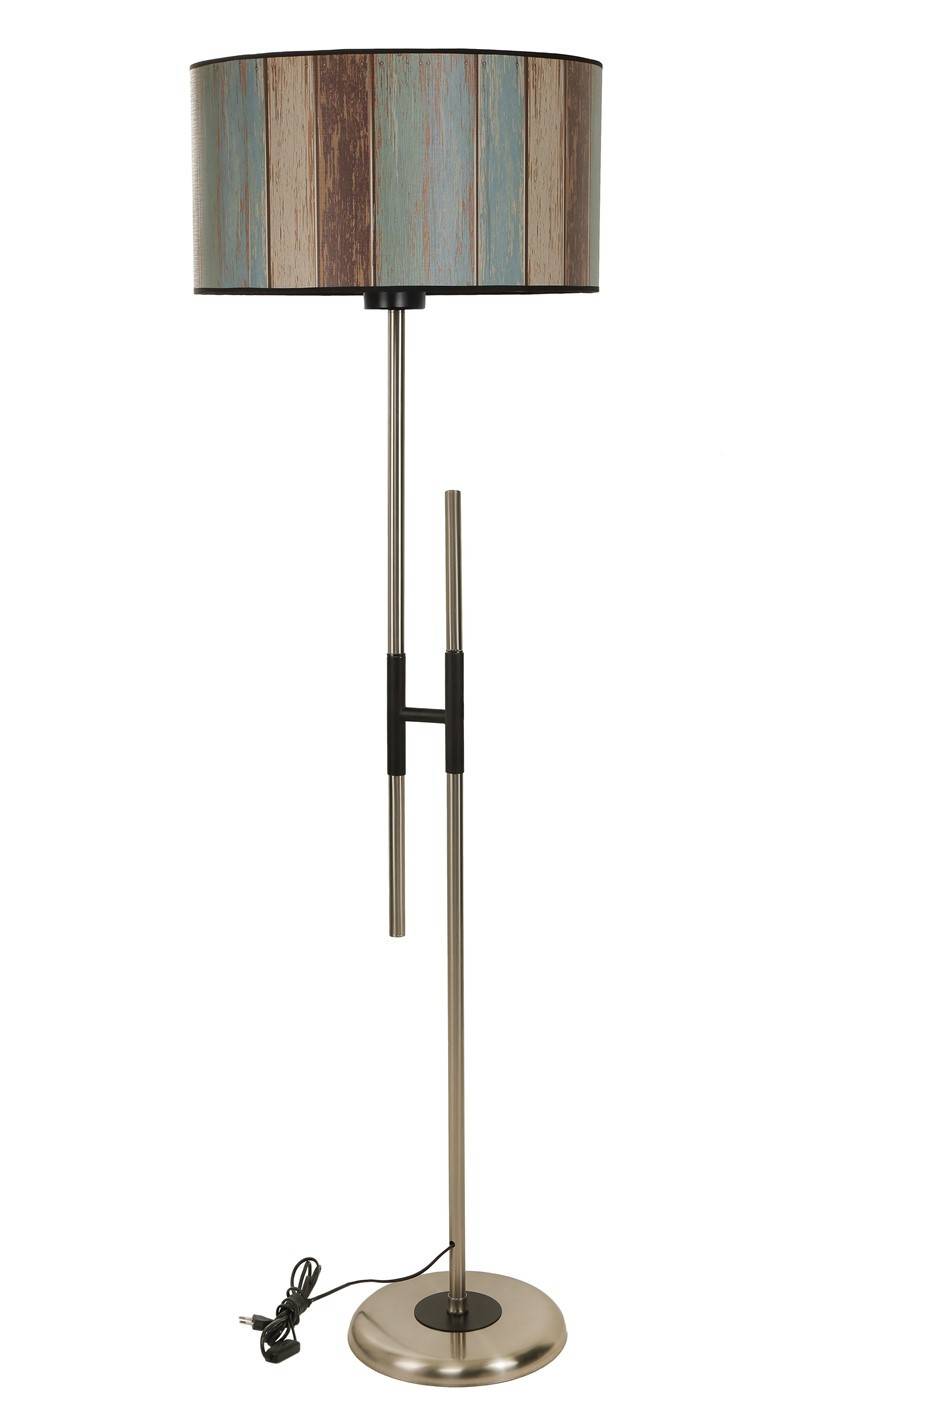 Zorax H-vormige vloerlamp H165cm Stof met Lambis-patroon in veelkleurig en zwart en brons metaal